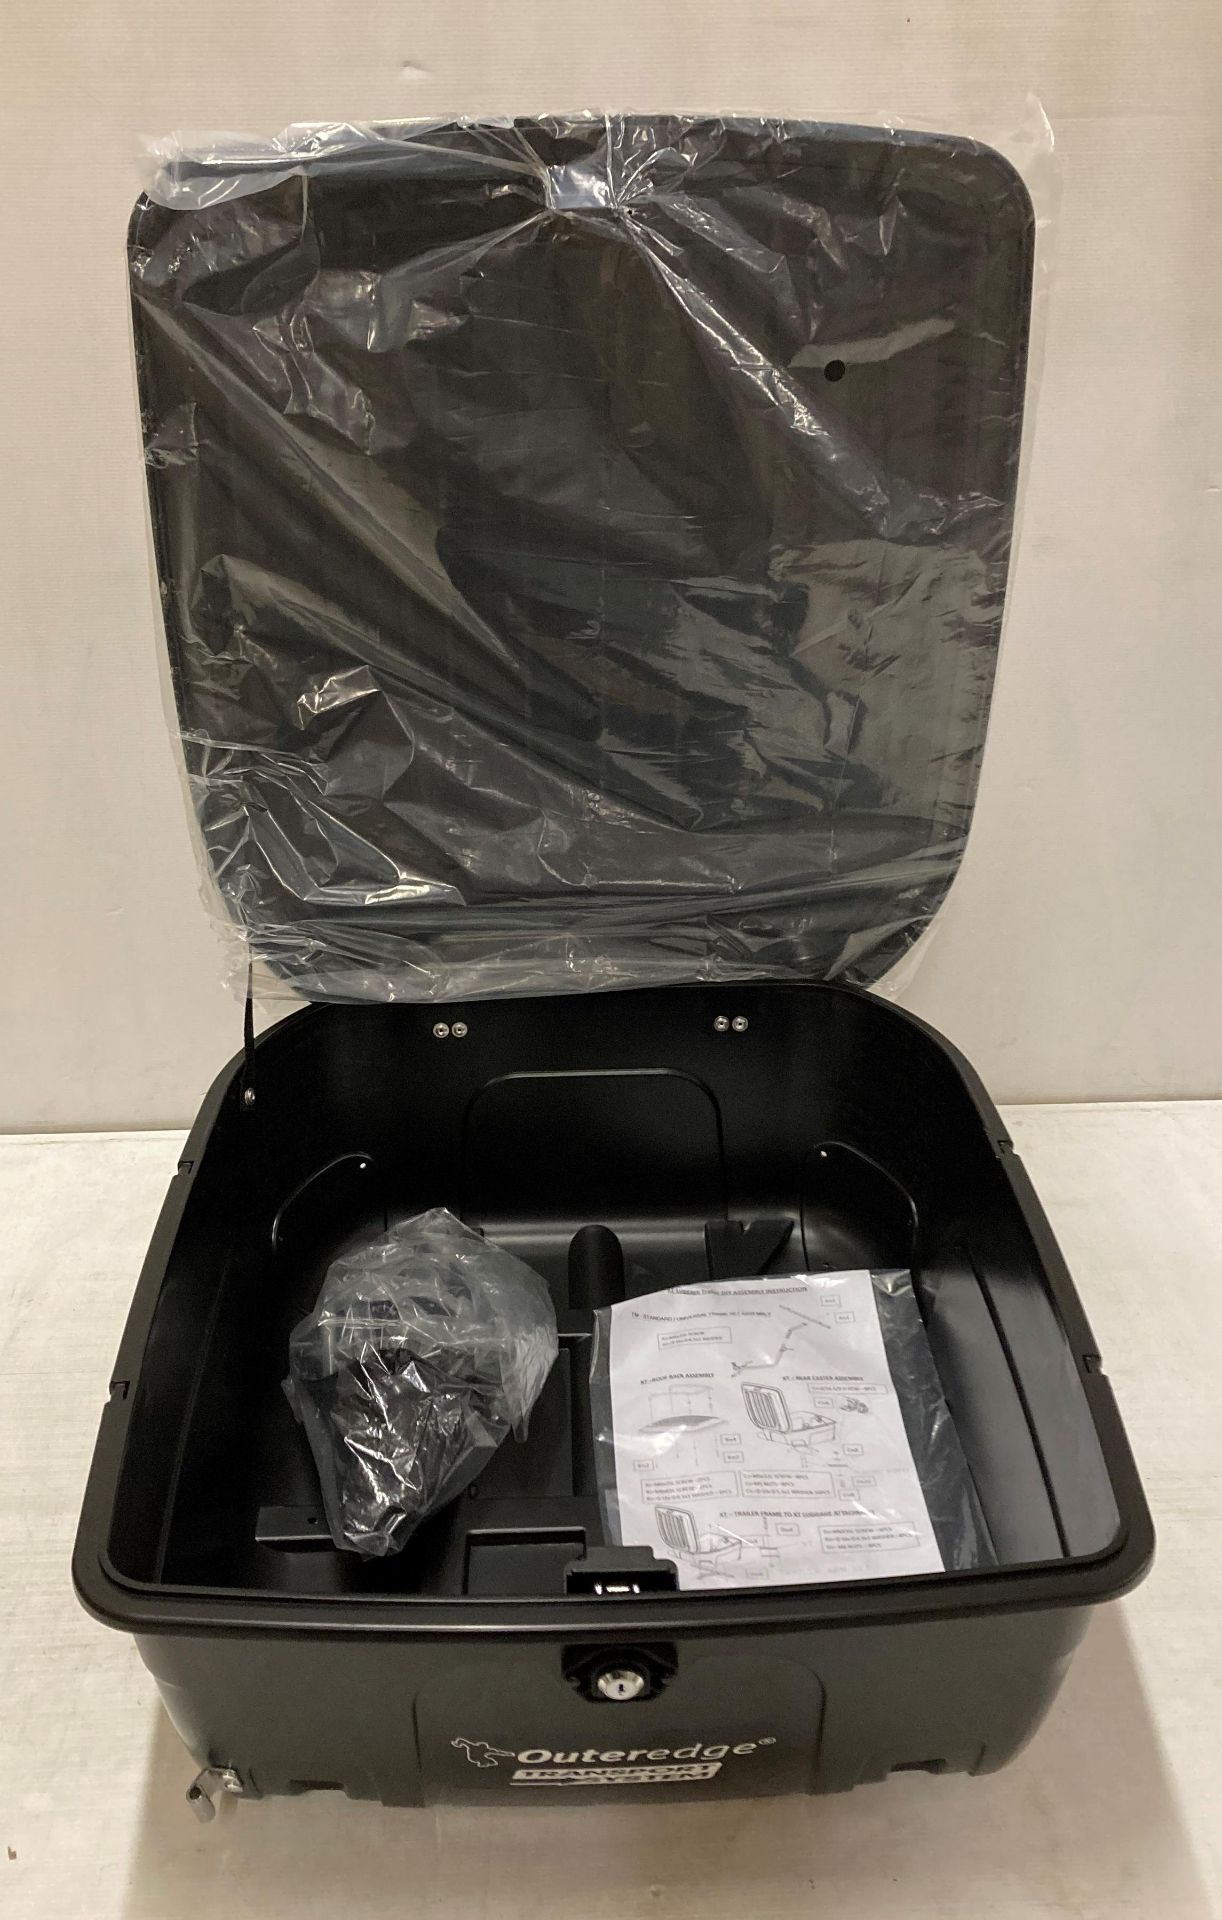 Outeredge Transport System roof rack luggage box (saleroom location: L06) - Image 2 of 4